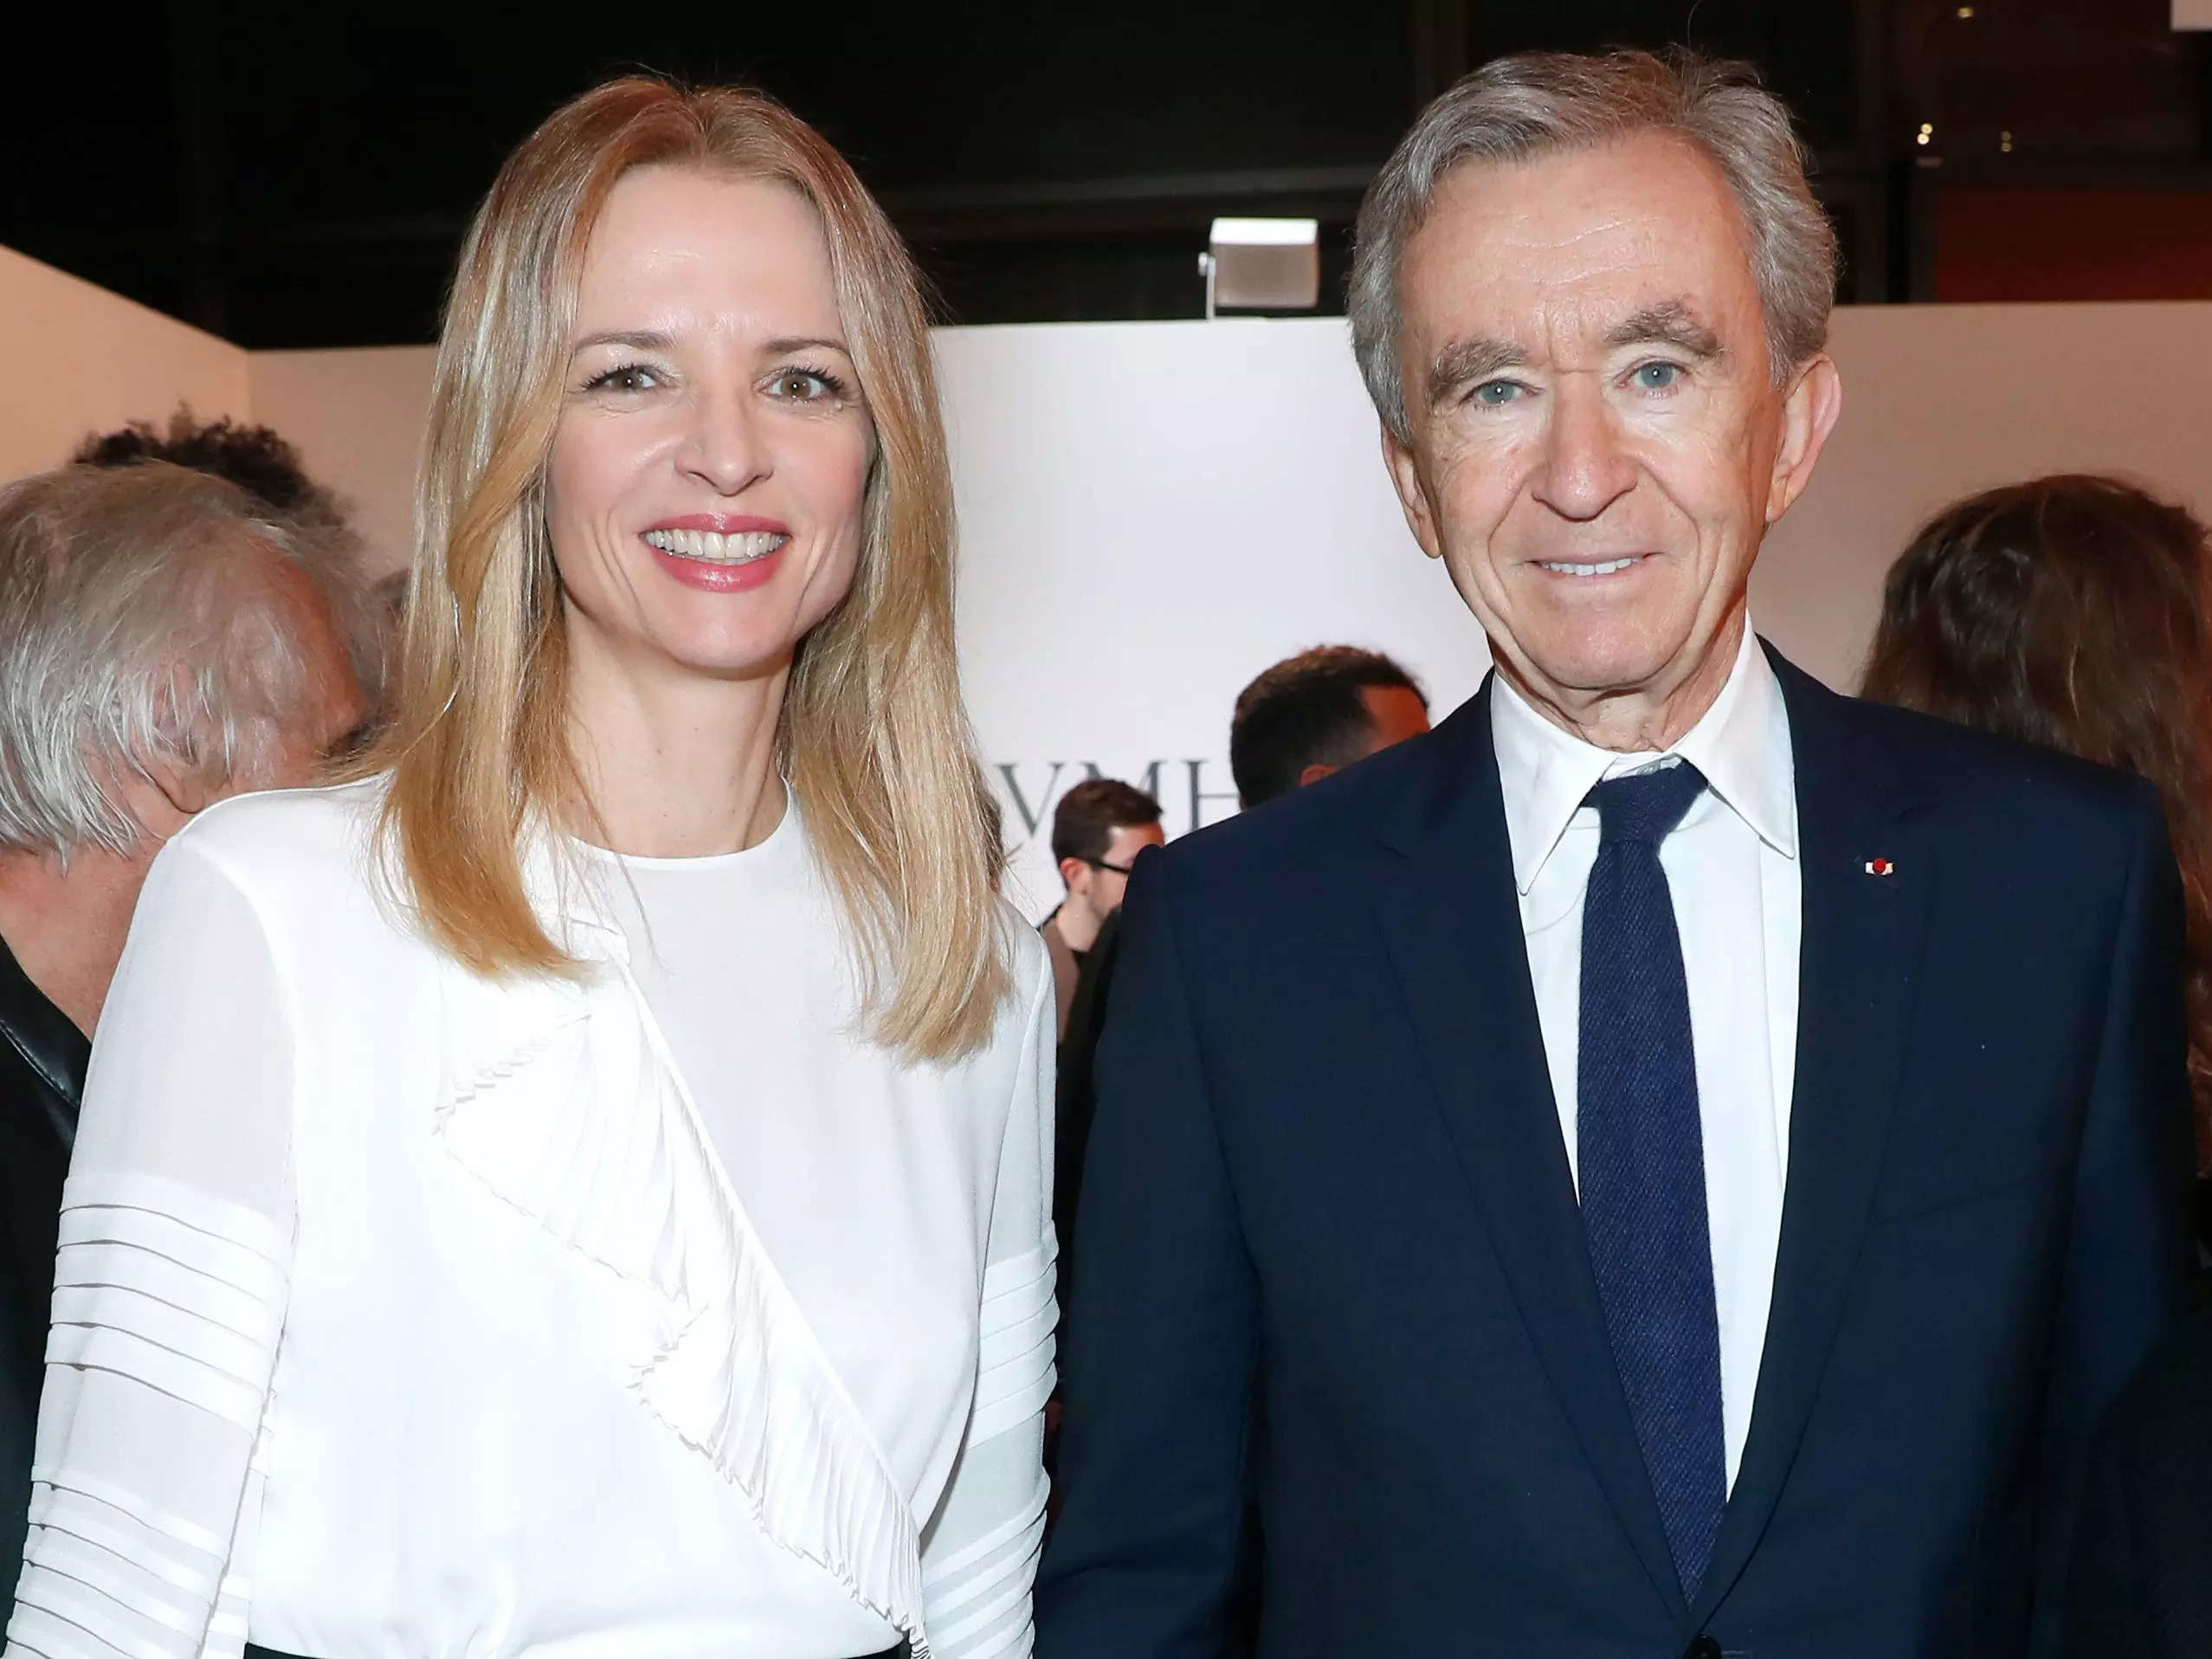 World's Richest Man Appoints Daughter Dior CEO